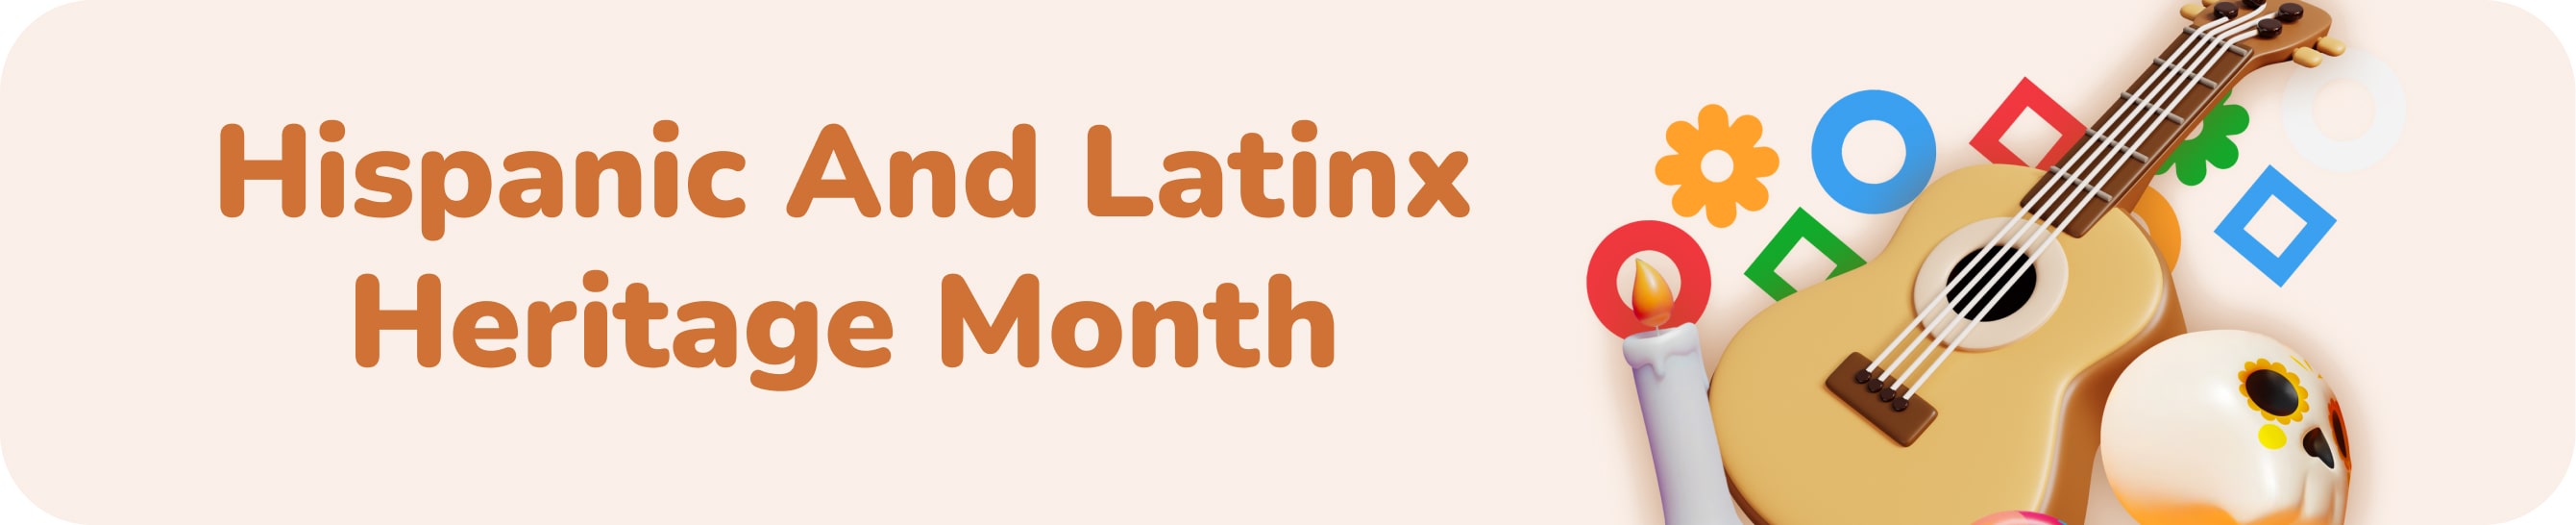 Hispanic and Latinx Heritage Month